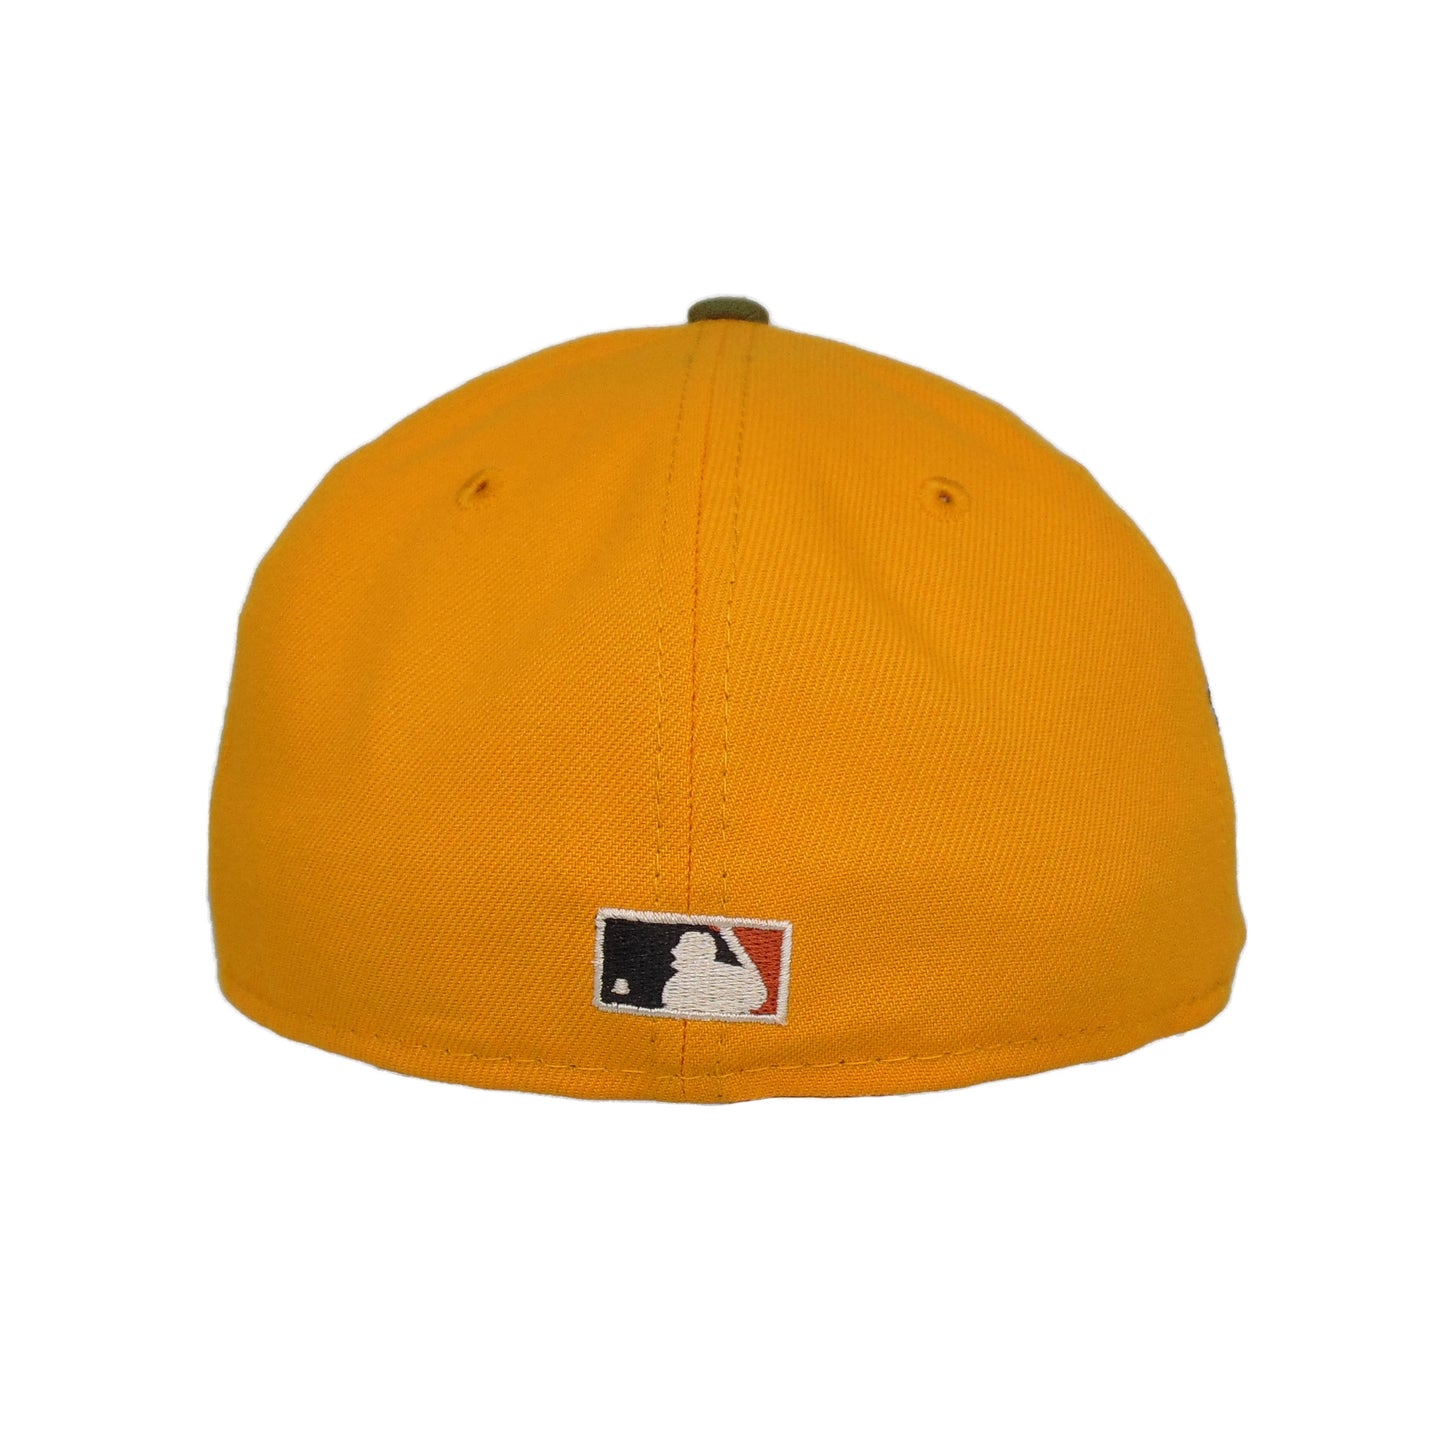 Los Angeles Dodgers Custom New Era 59FIFTY Cap yellow 40th